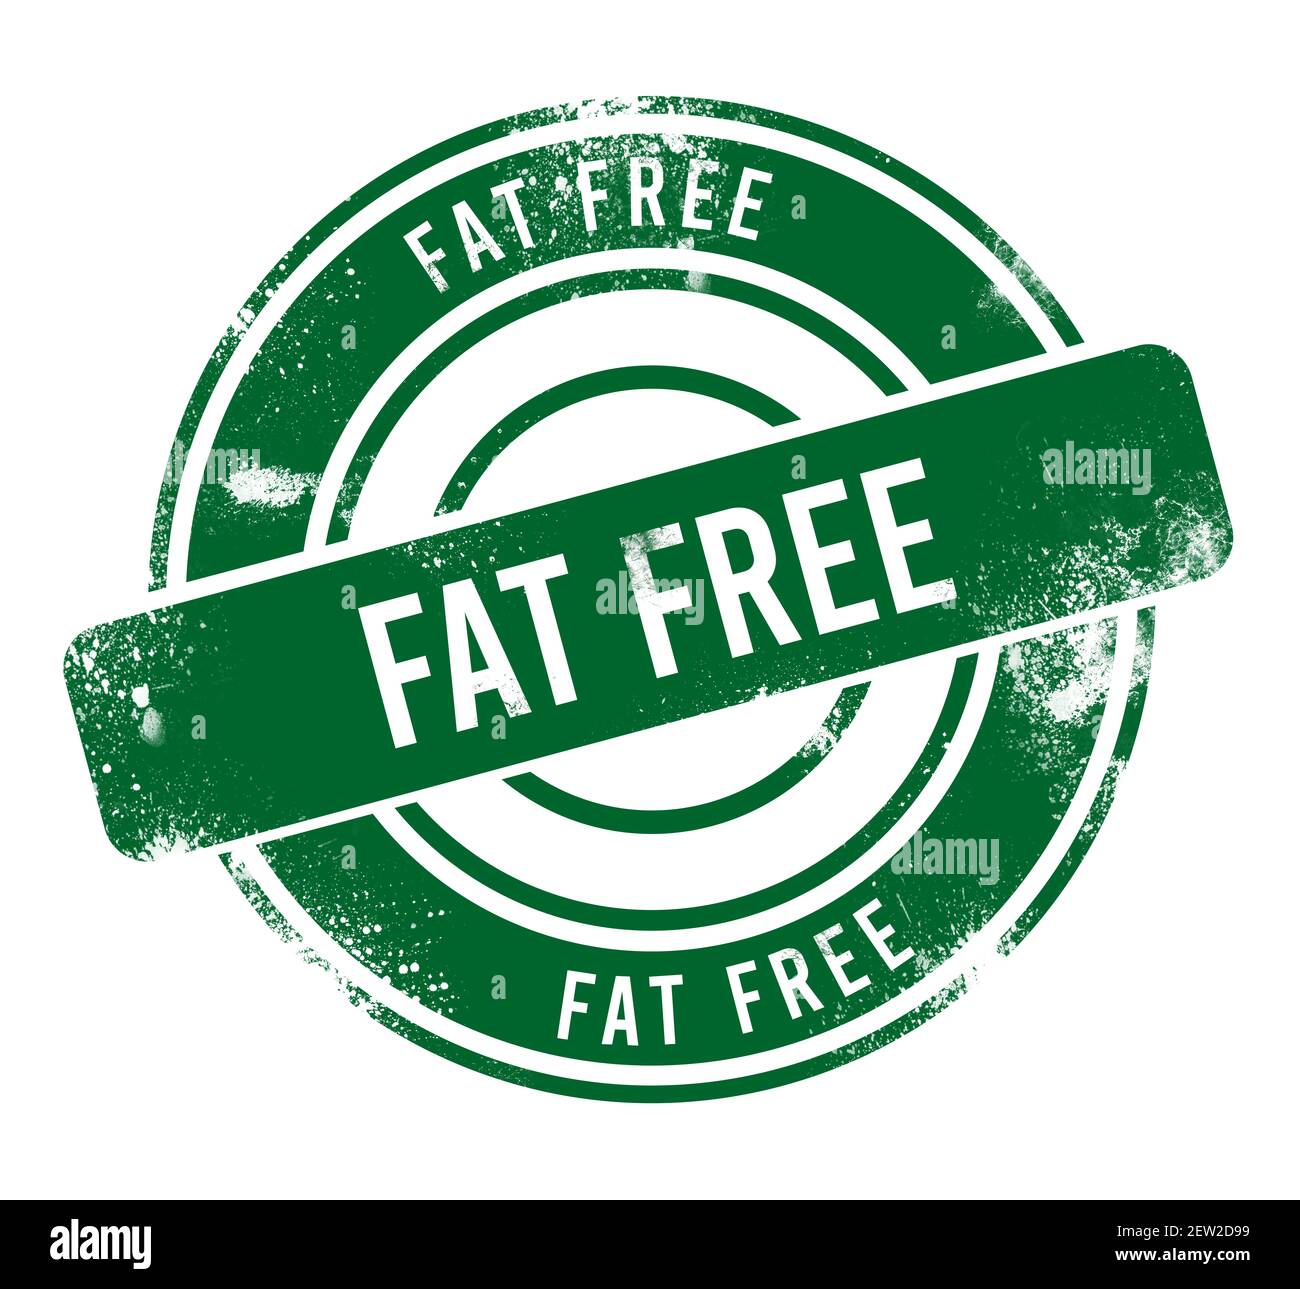 Fat free - green round grunge button, stamp Stock Photo